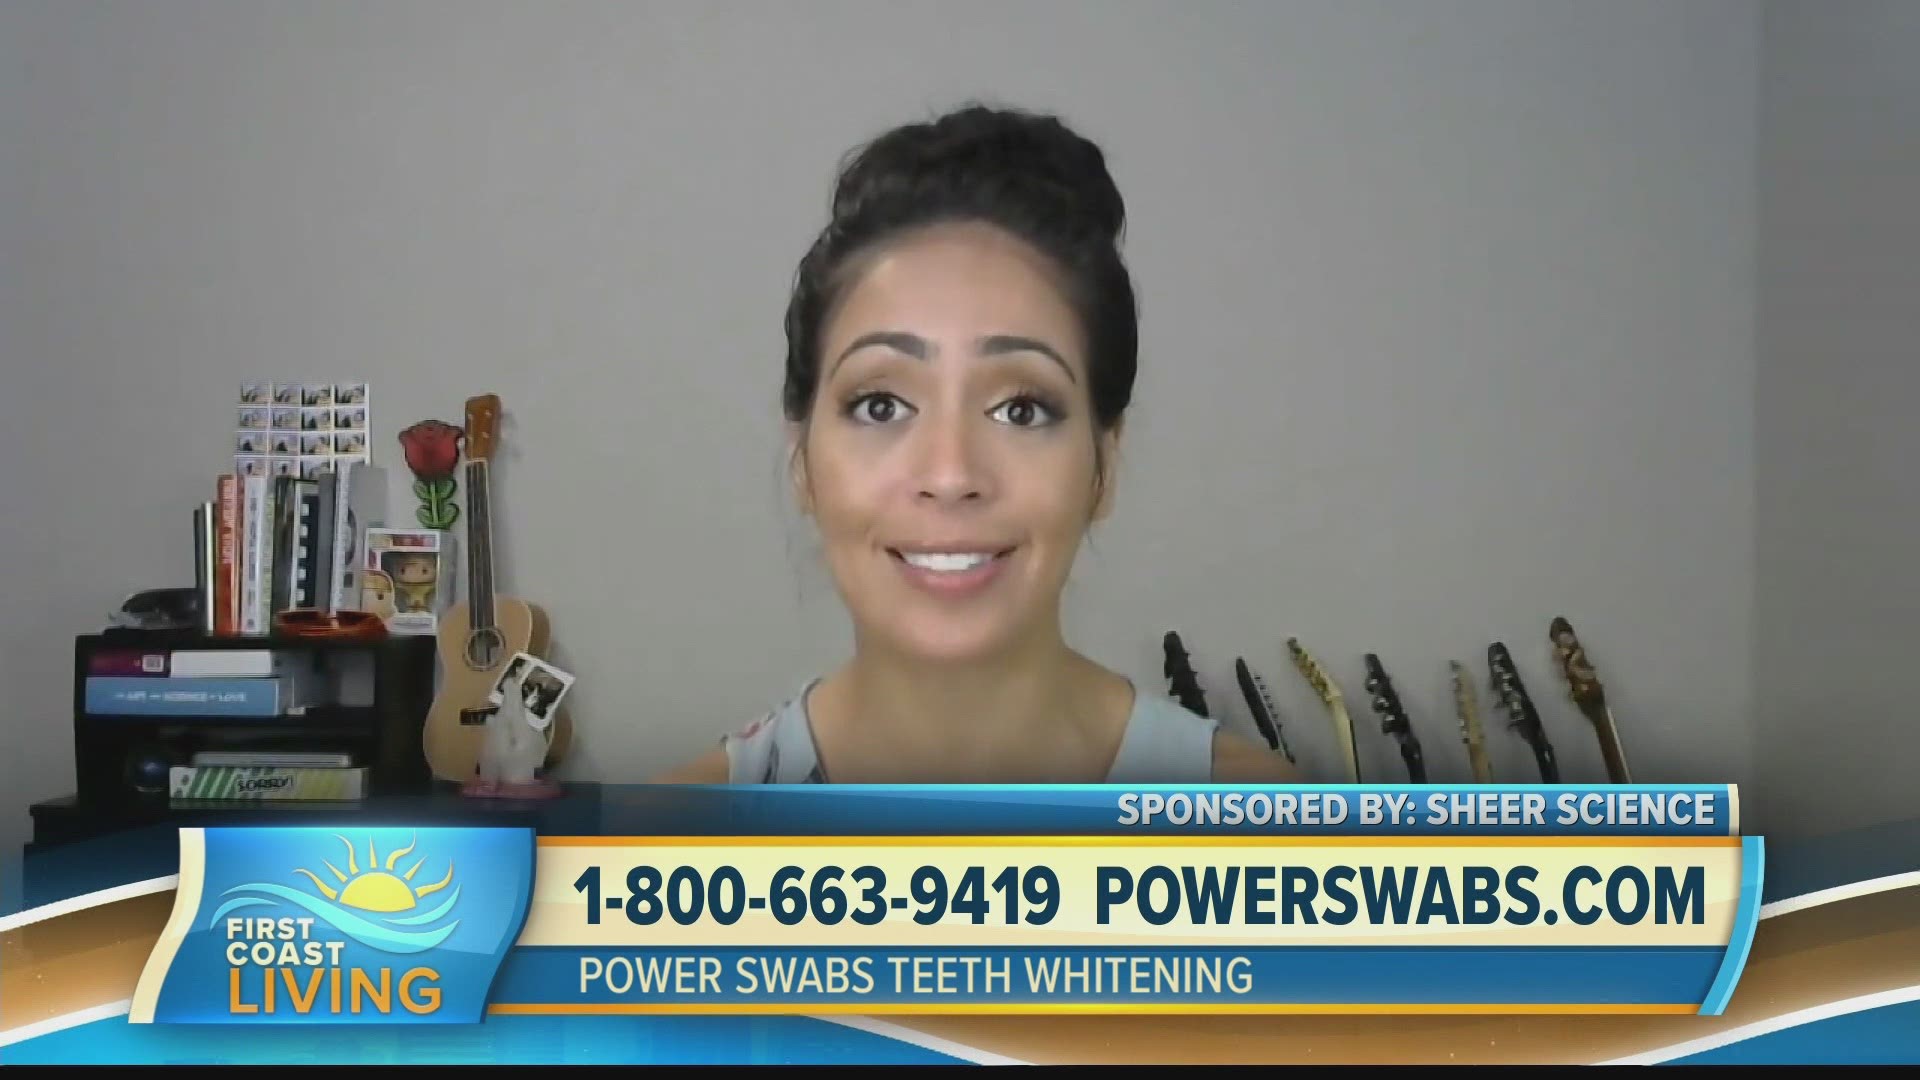 Power Swab promises whiter teeth without sensitivity.  PowerSwabs.com  1-800-663-9419